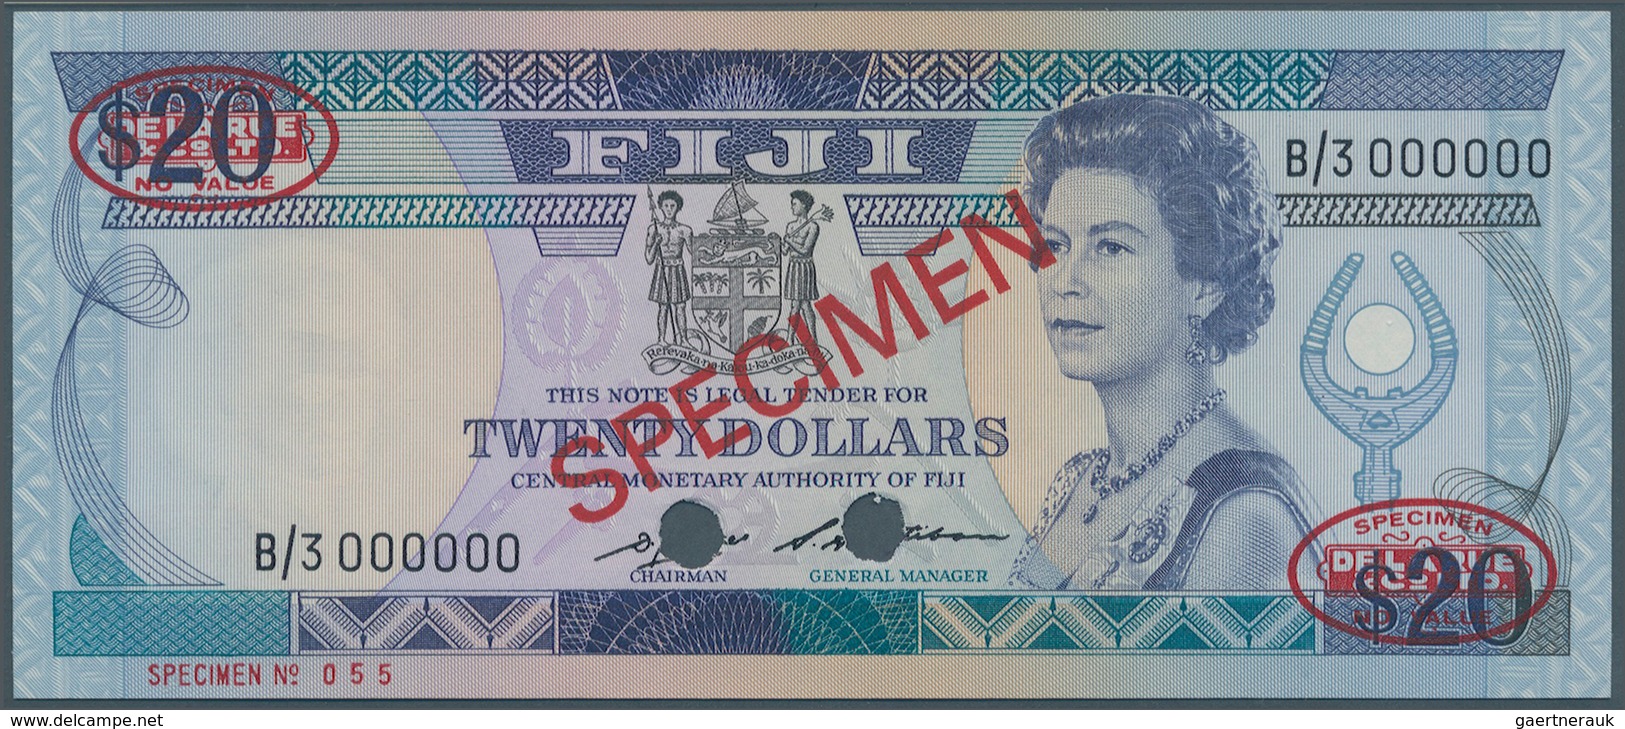 01450 Fiji: 20 Dollars ND(1986) SPECIMEN, P.85s1 With Ovpt. Specimen, Cancellation Holes At Lower Center, - Fiji